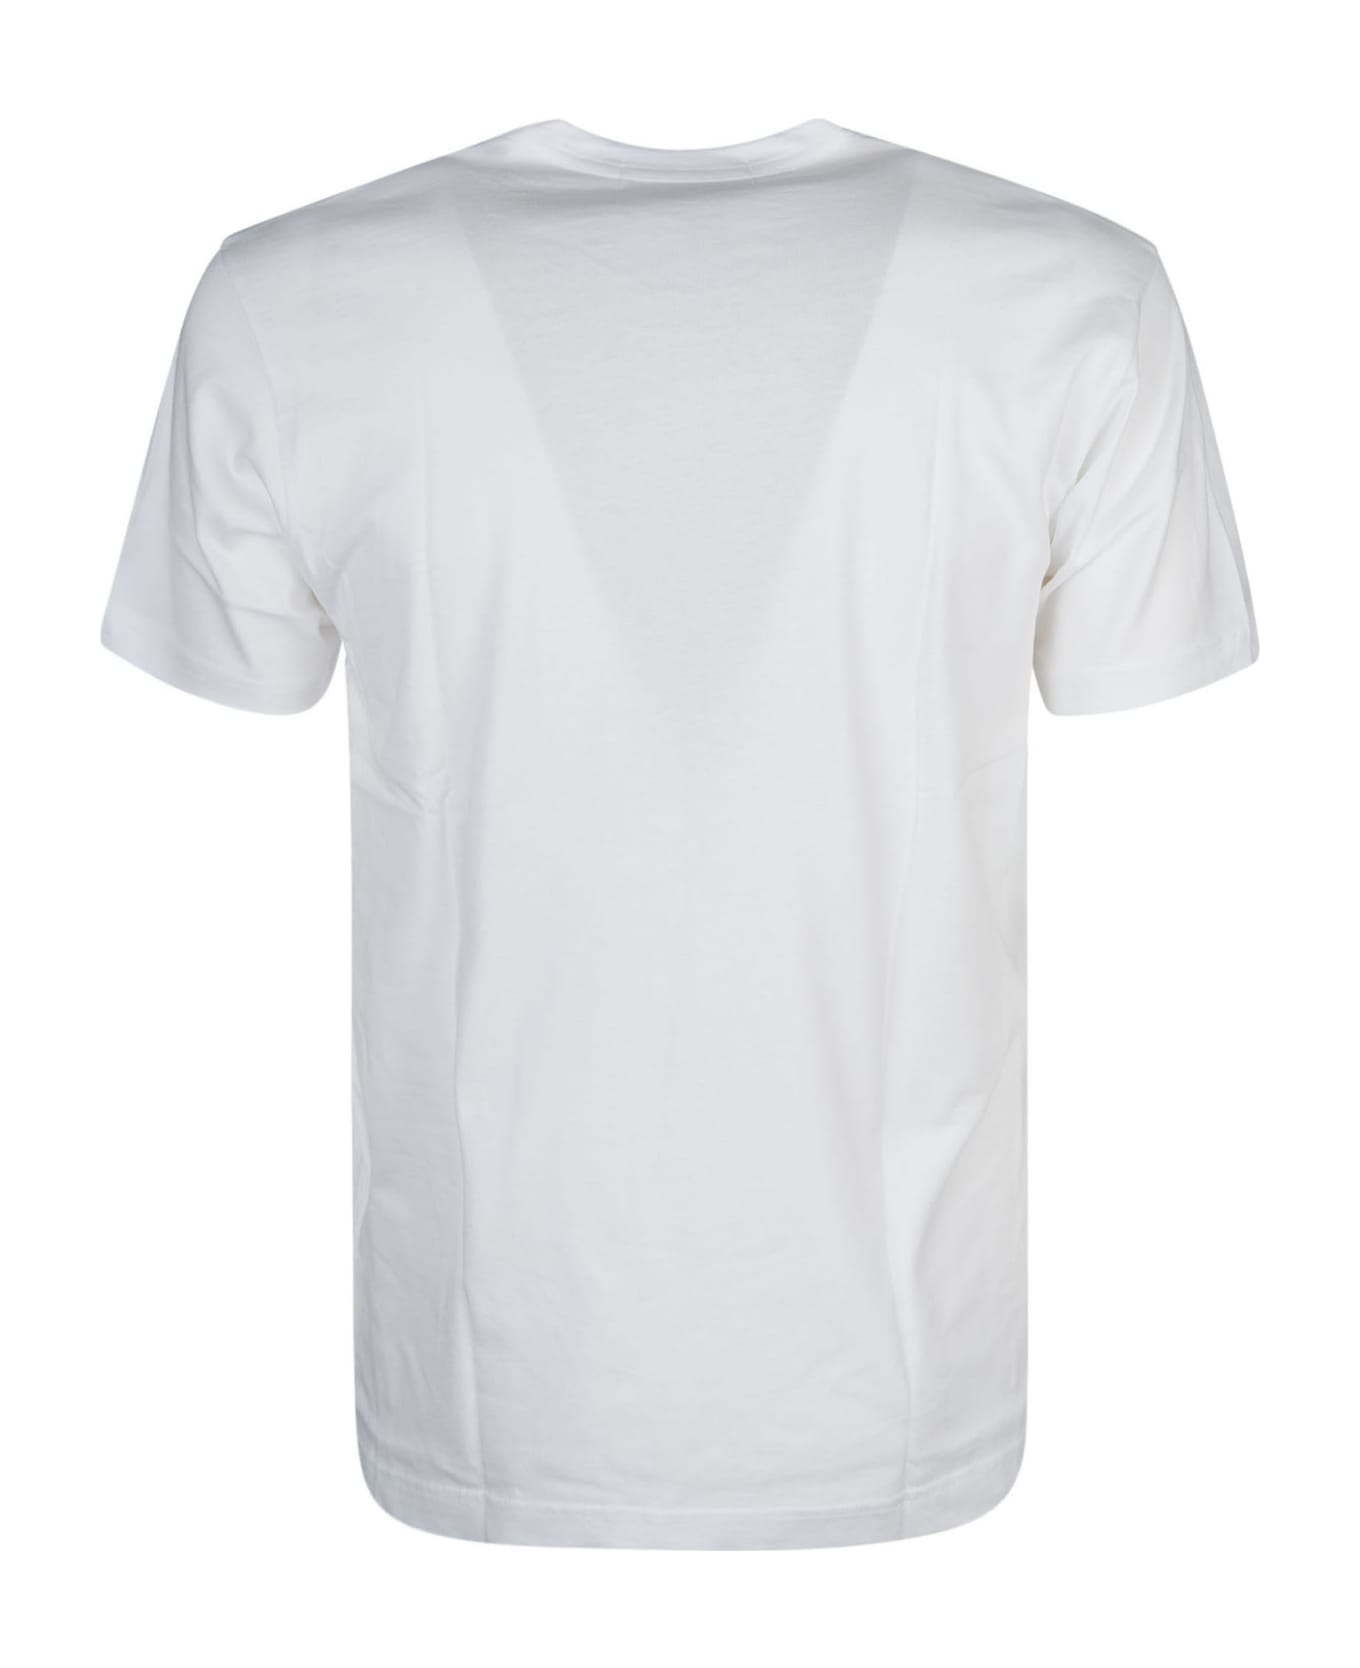 Comme des Garçons Shirt Boy Fresh T-shirt - White シャツ